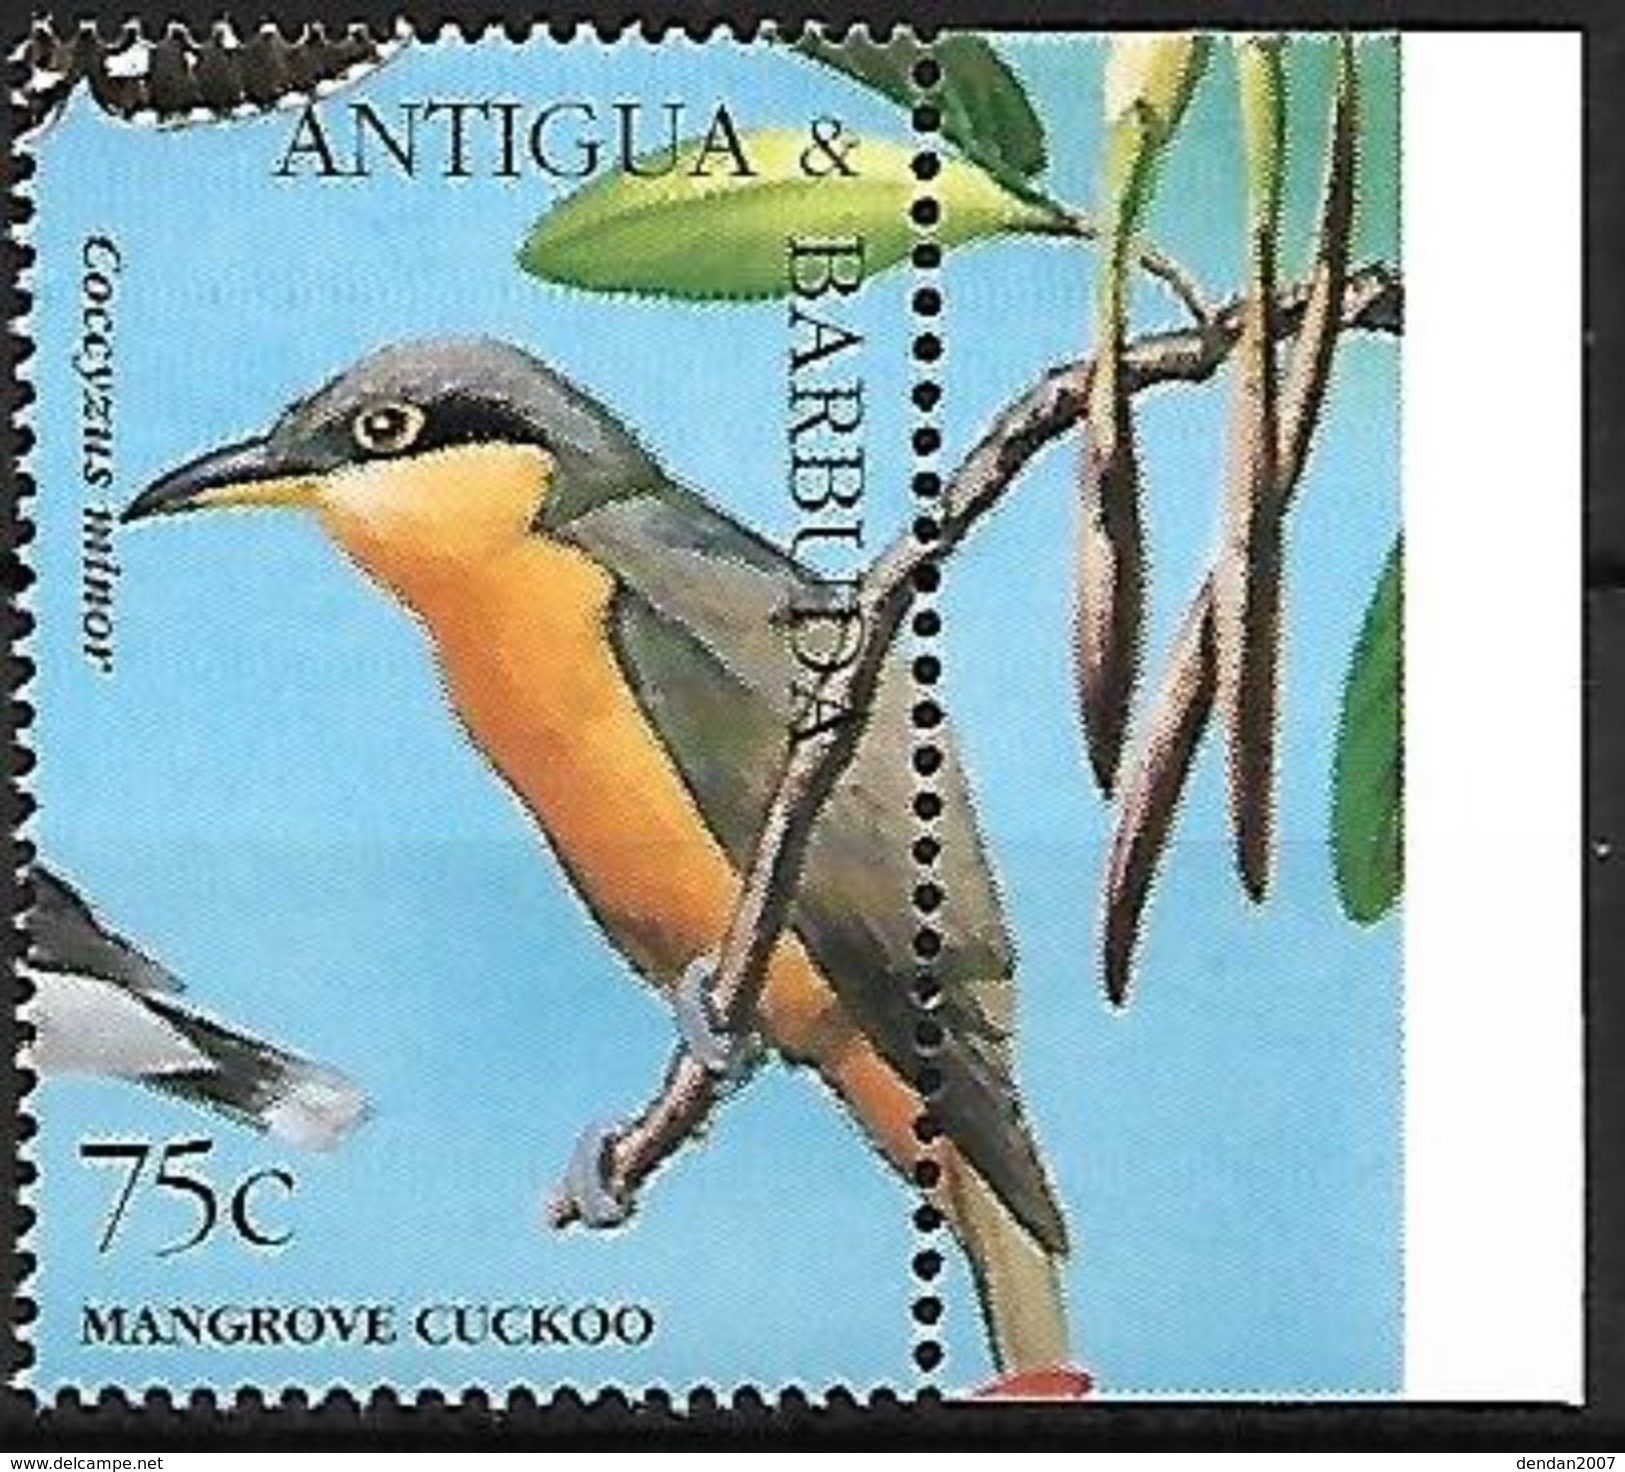 Antigua & Barbuda - 1995 - MNH - Mangove Cuckoo (Coccyzus Minor) - Cuco, Cuclillos